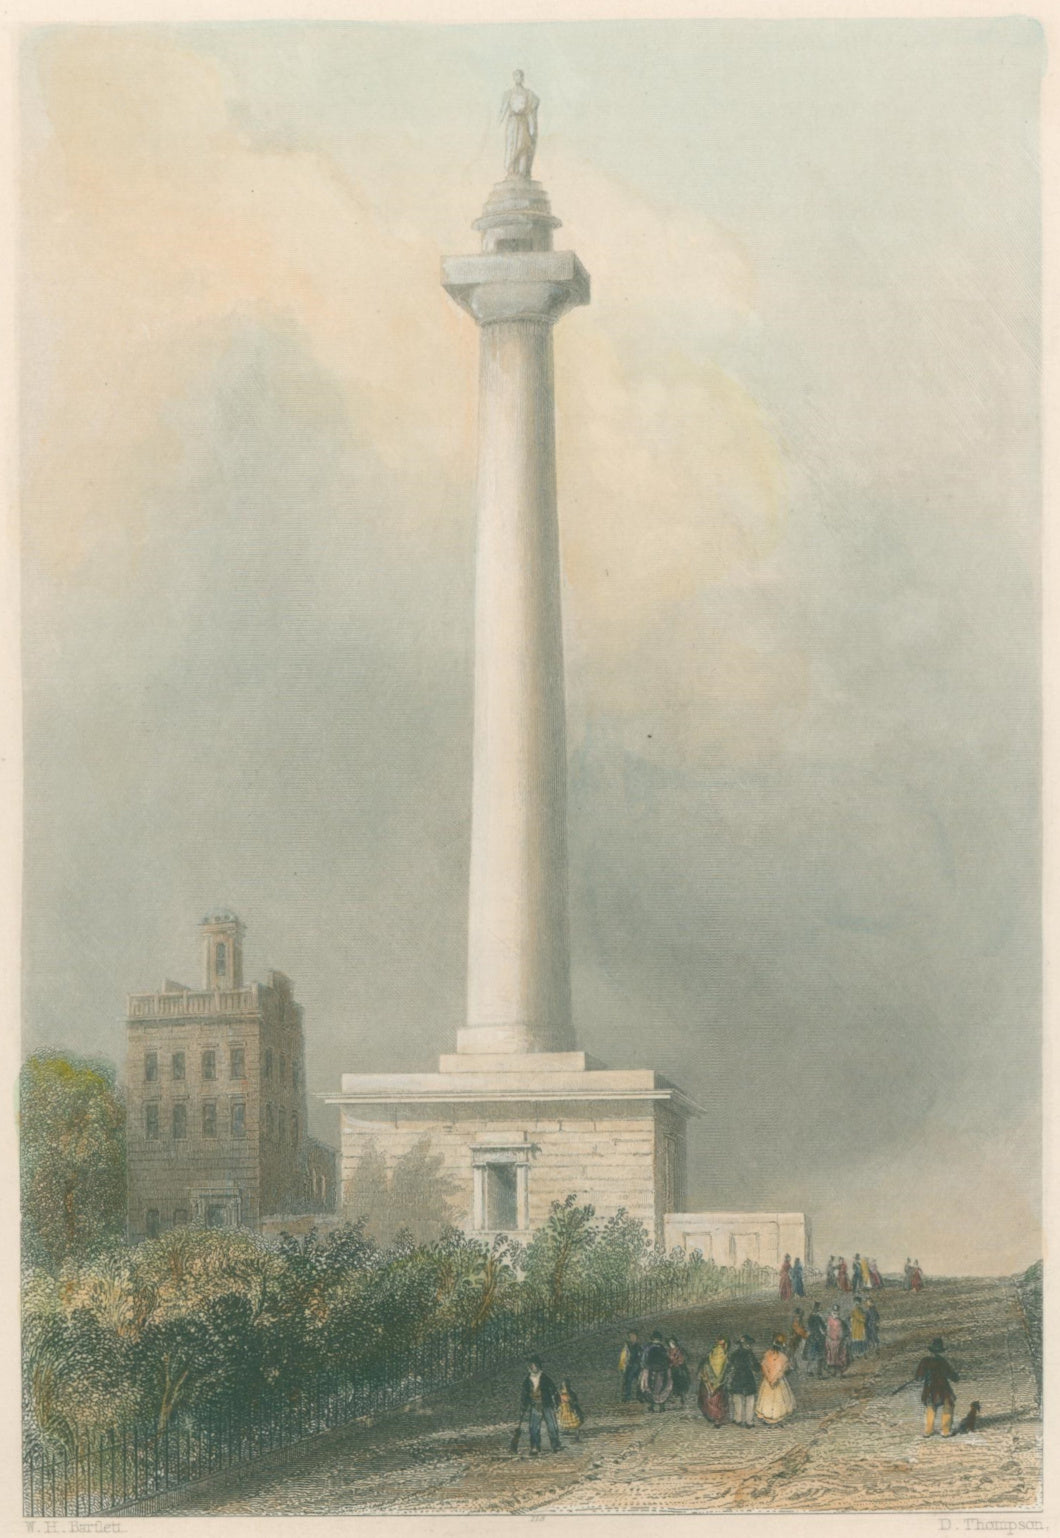 Bartlett, W.H.  “Washington’s Monument, Baltimore